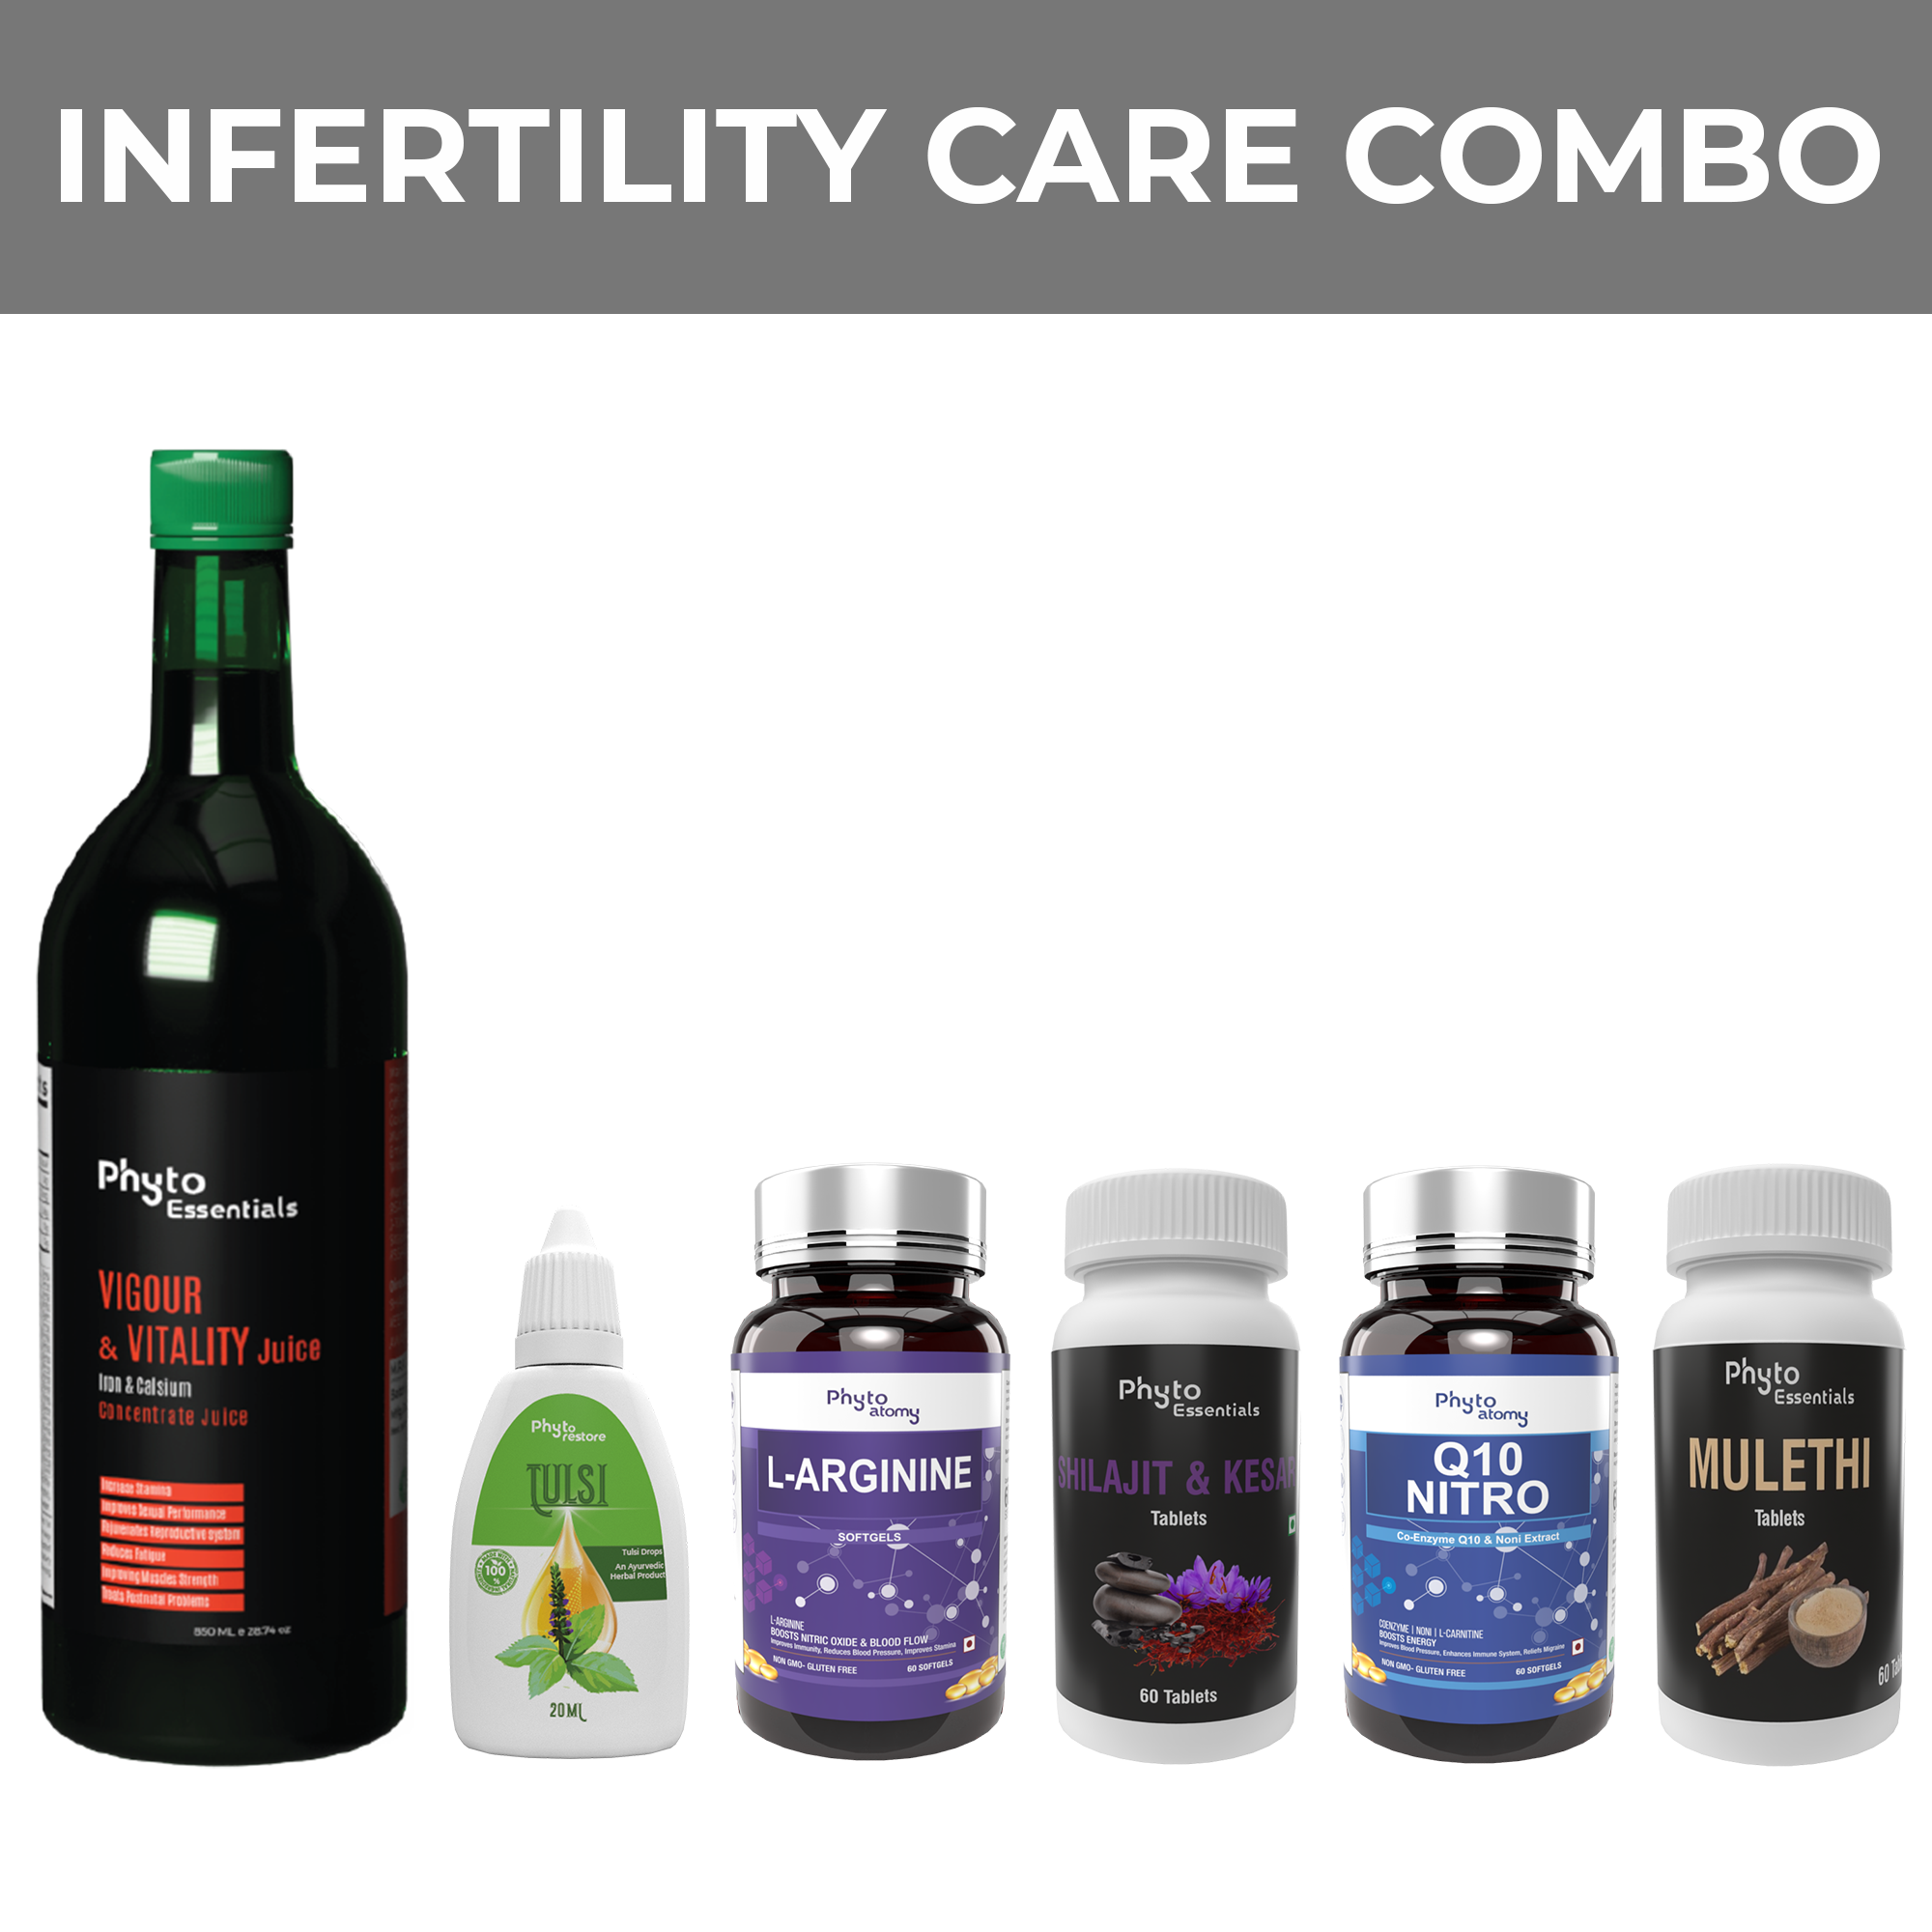 Infertility Care Combo